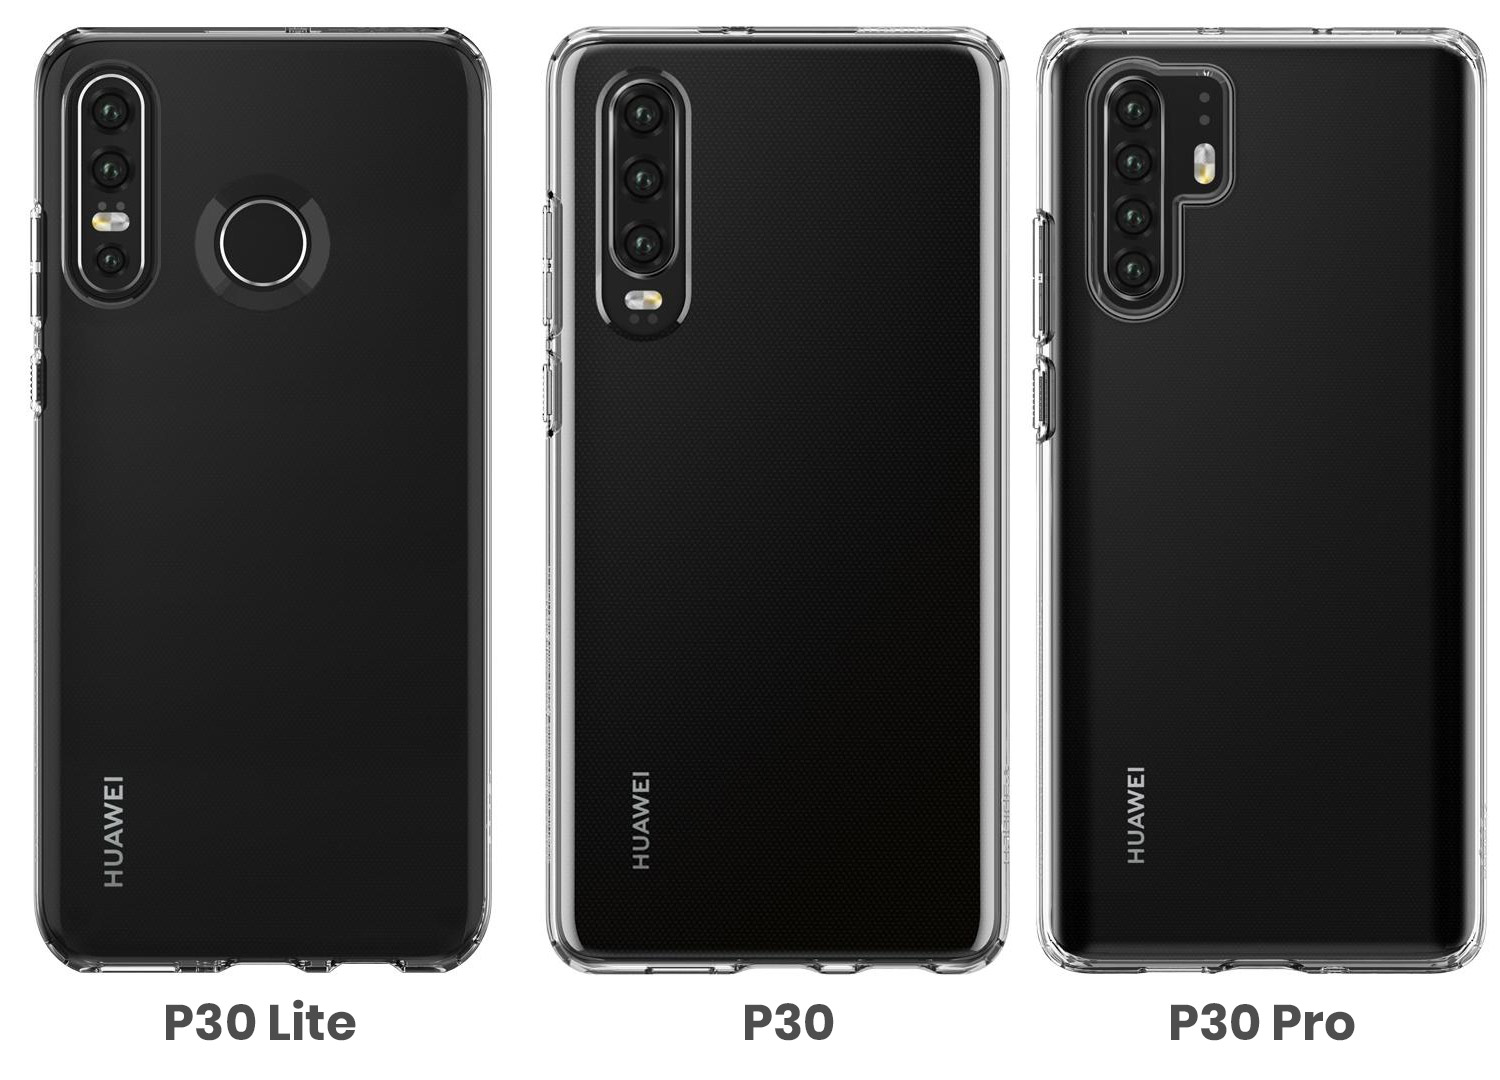 Huawei P30 Lite design revealed. Triple-camera setup confirmed - SoyaCincau